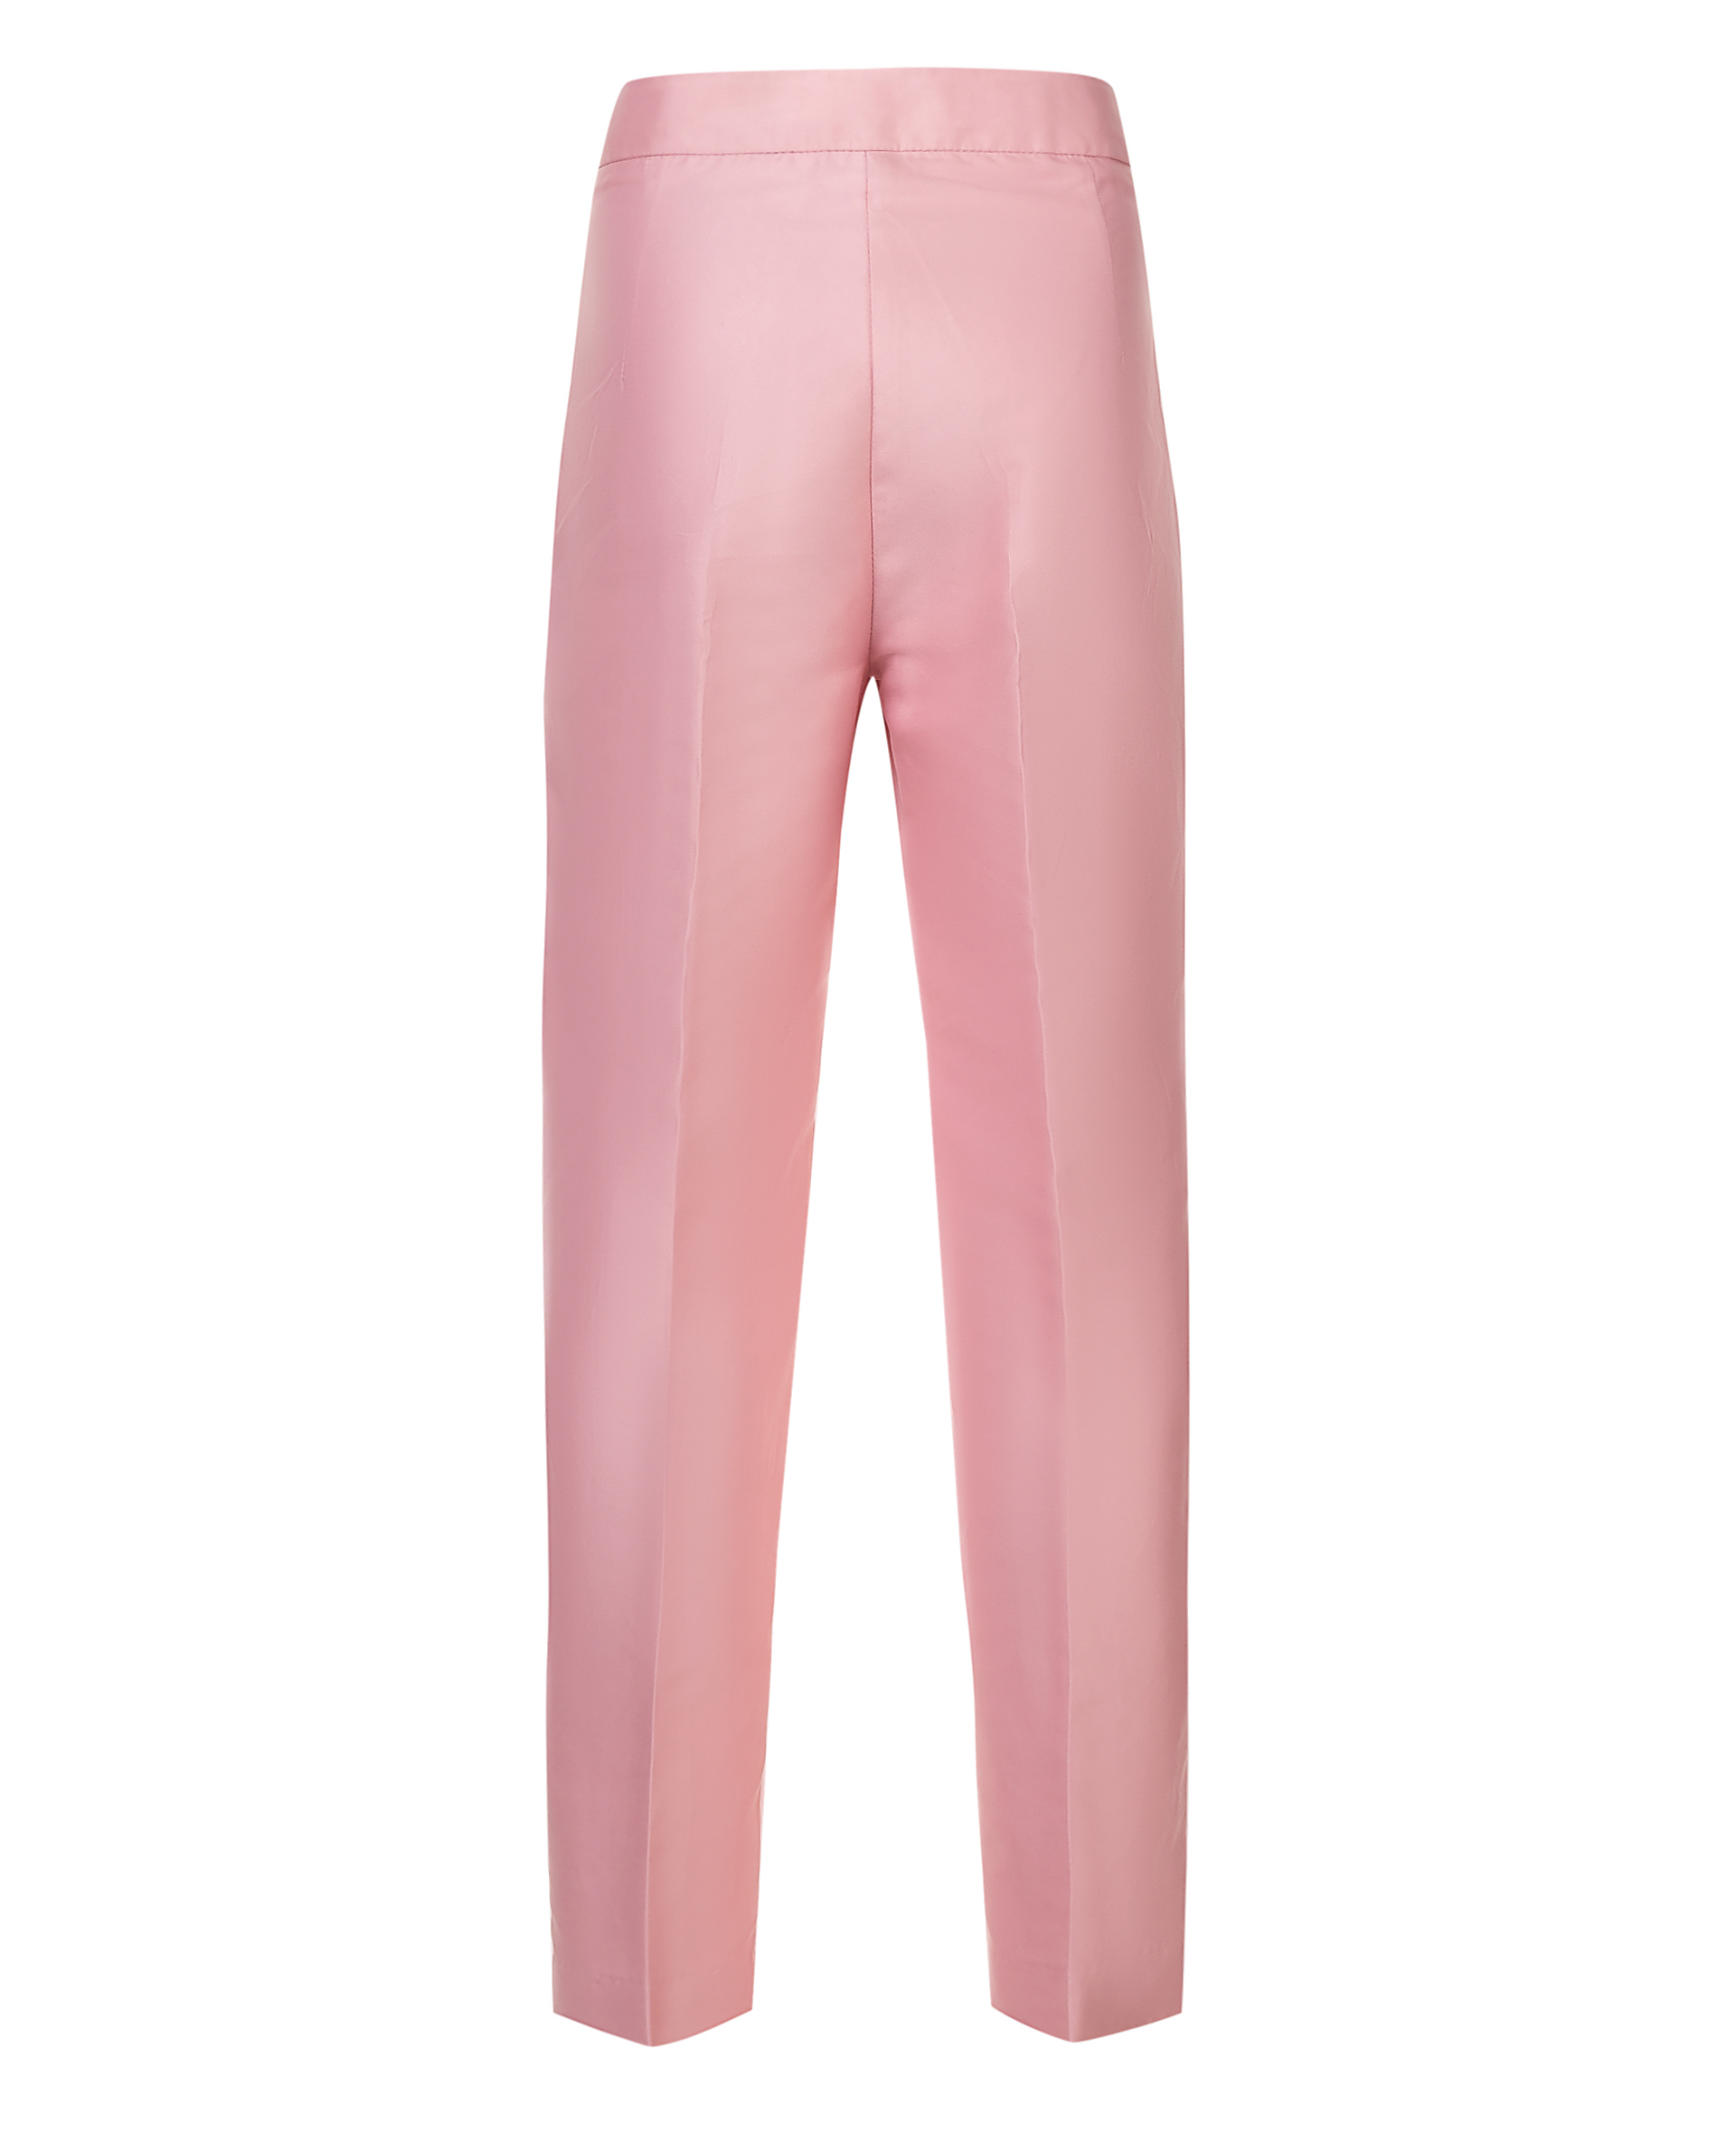 Розовые брюки Gulliver 119GPGJC6301, размер 140, цвет розовый - фото 2